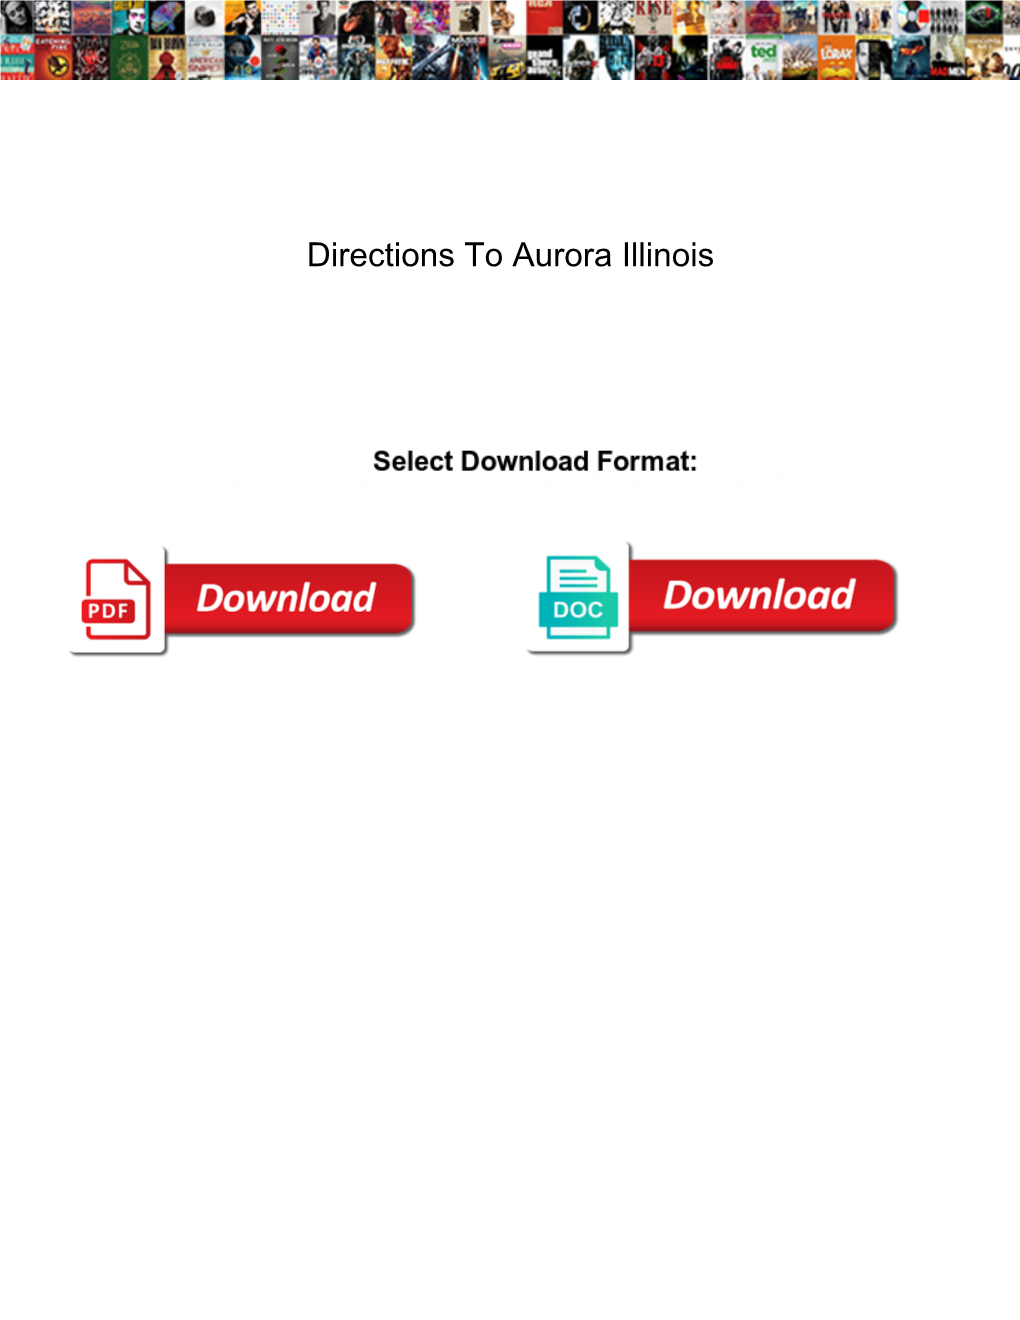 Directions to Aurora Illinois